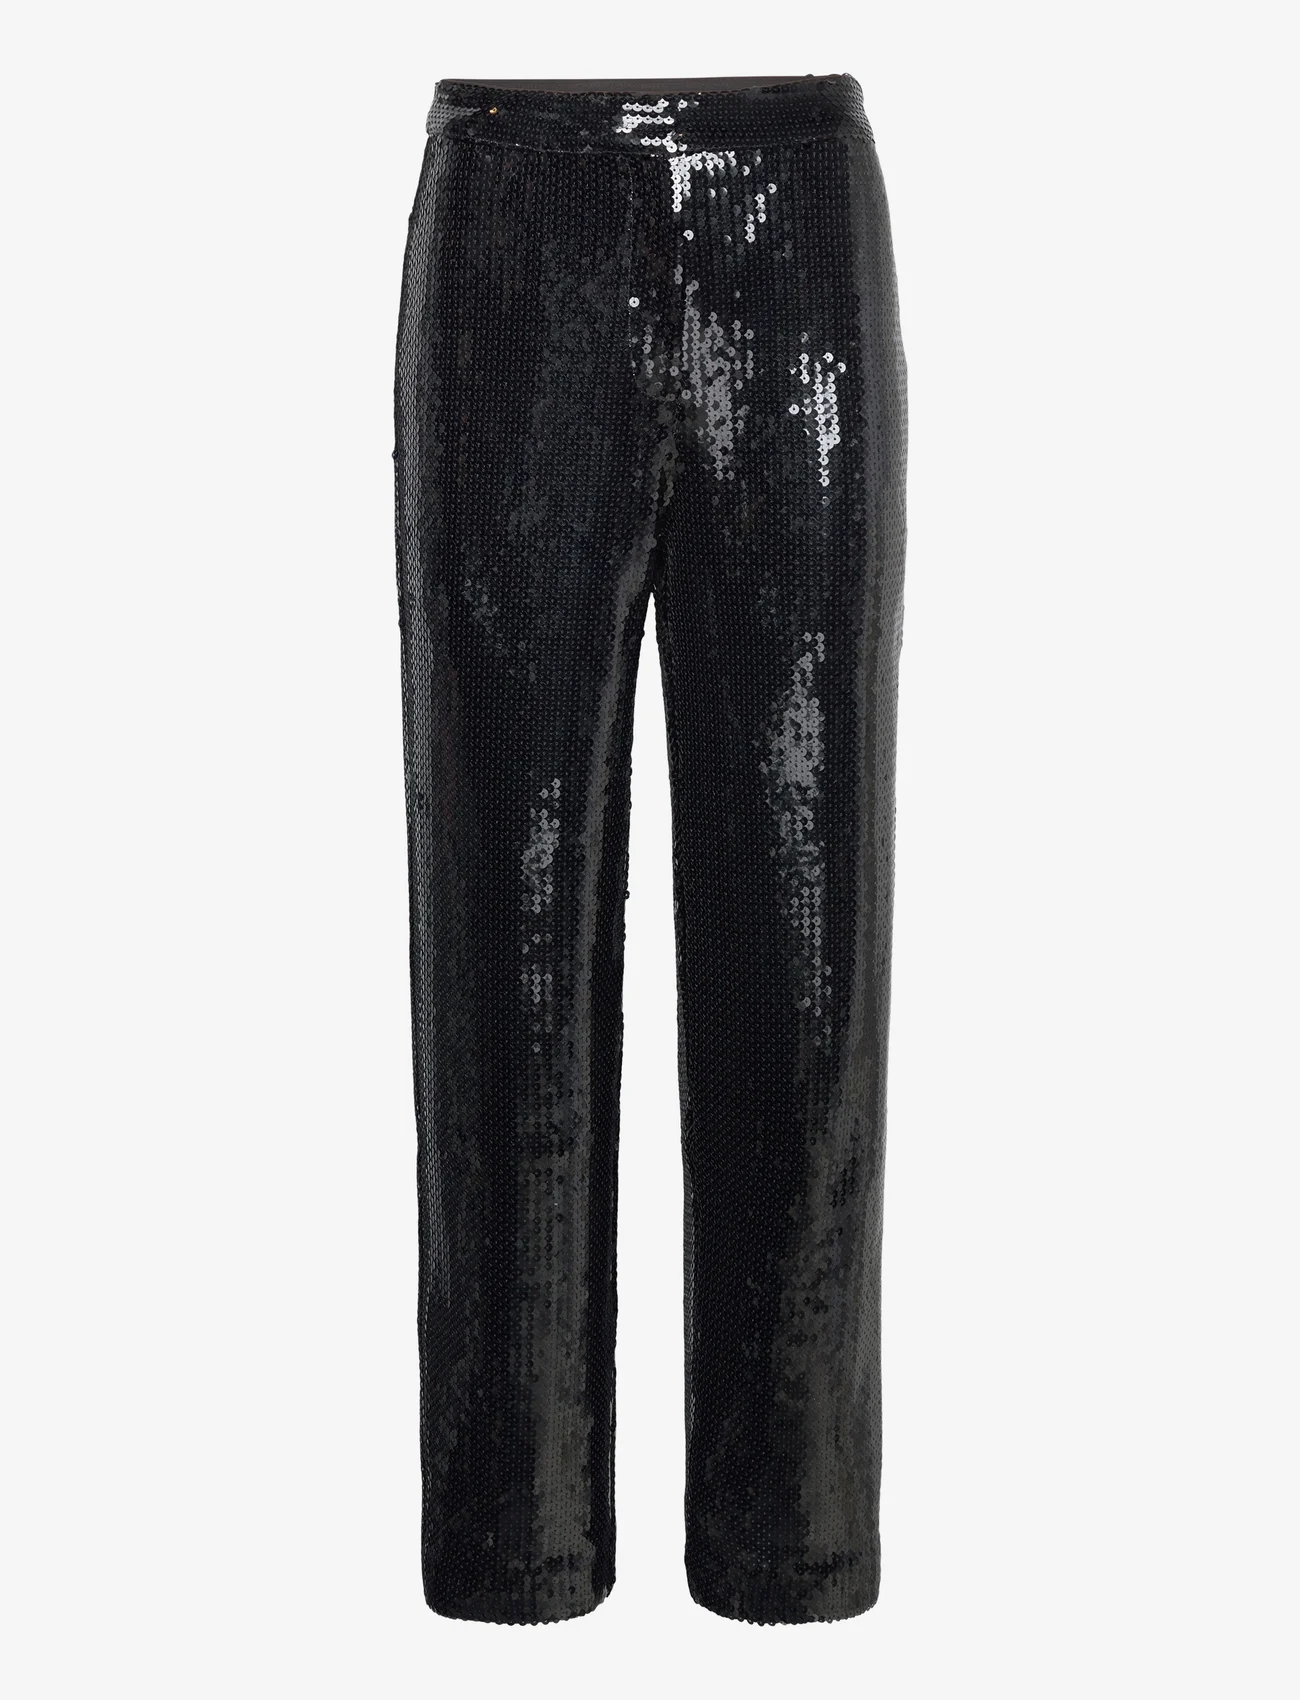 Samsøe Samsøe - Agneta trousers 14904 - plačios kelnės - black - 0